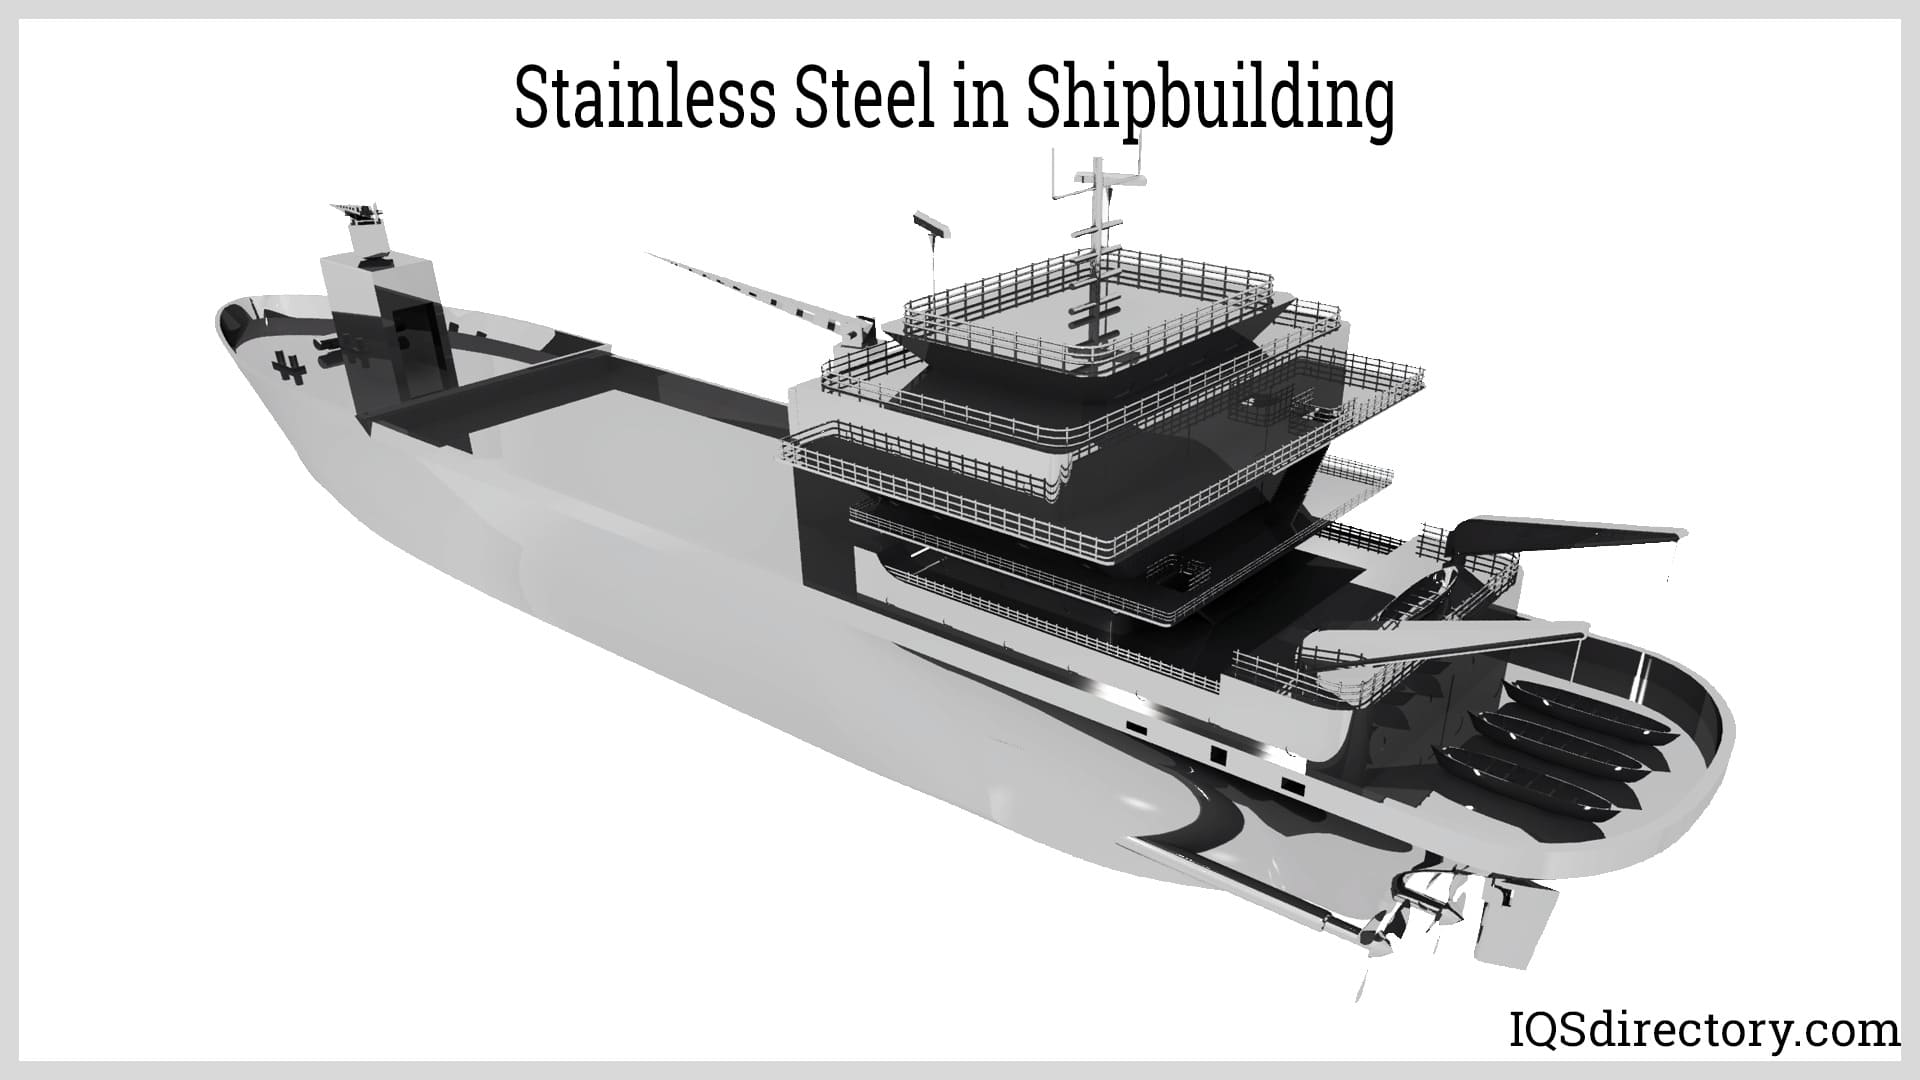 Stainless Steel in Shipbuilding